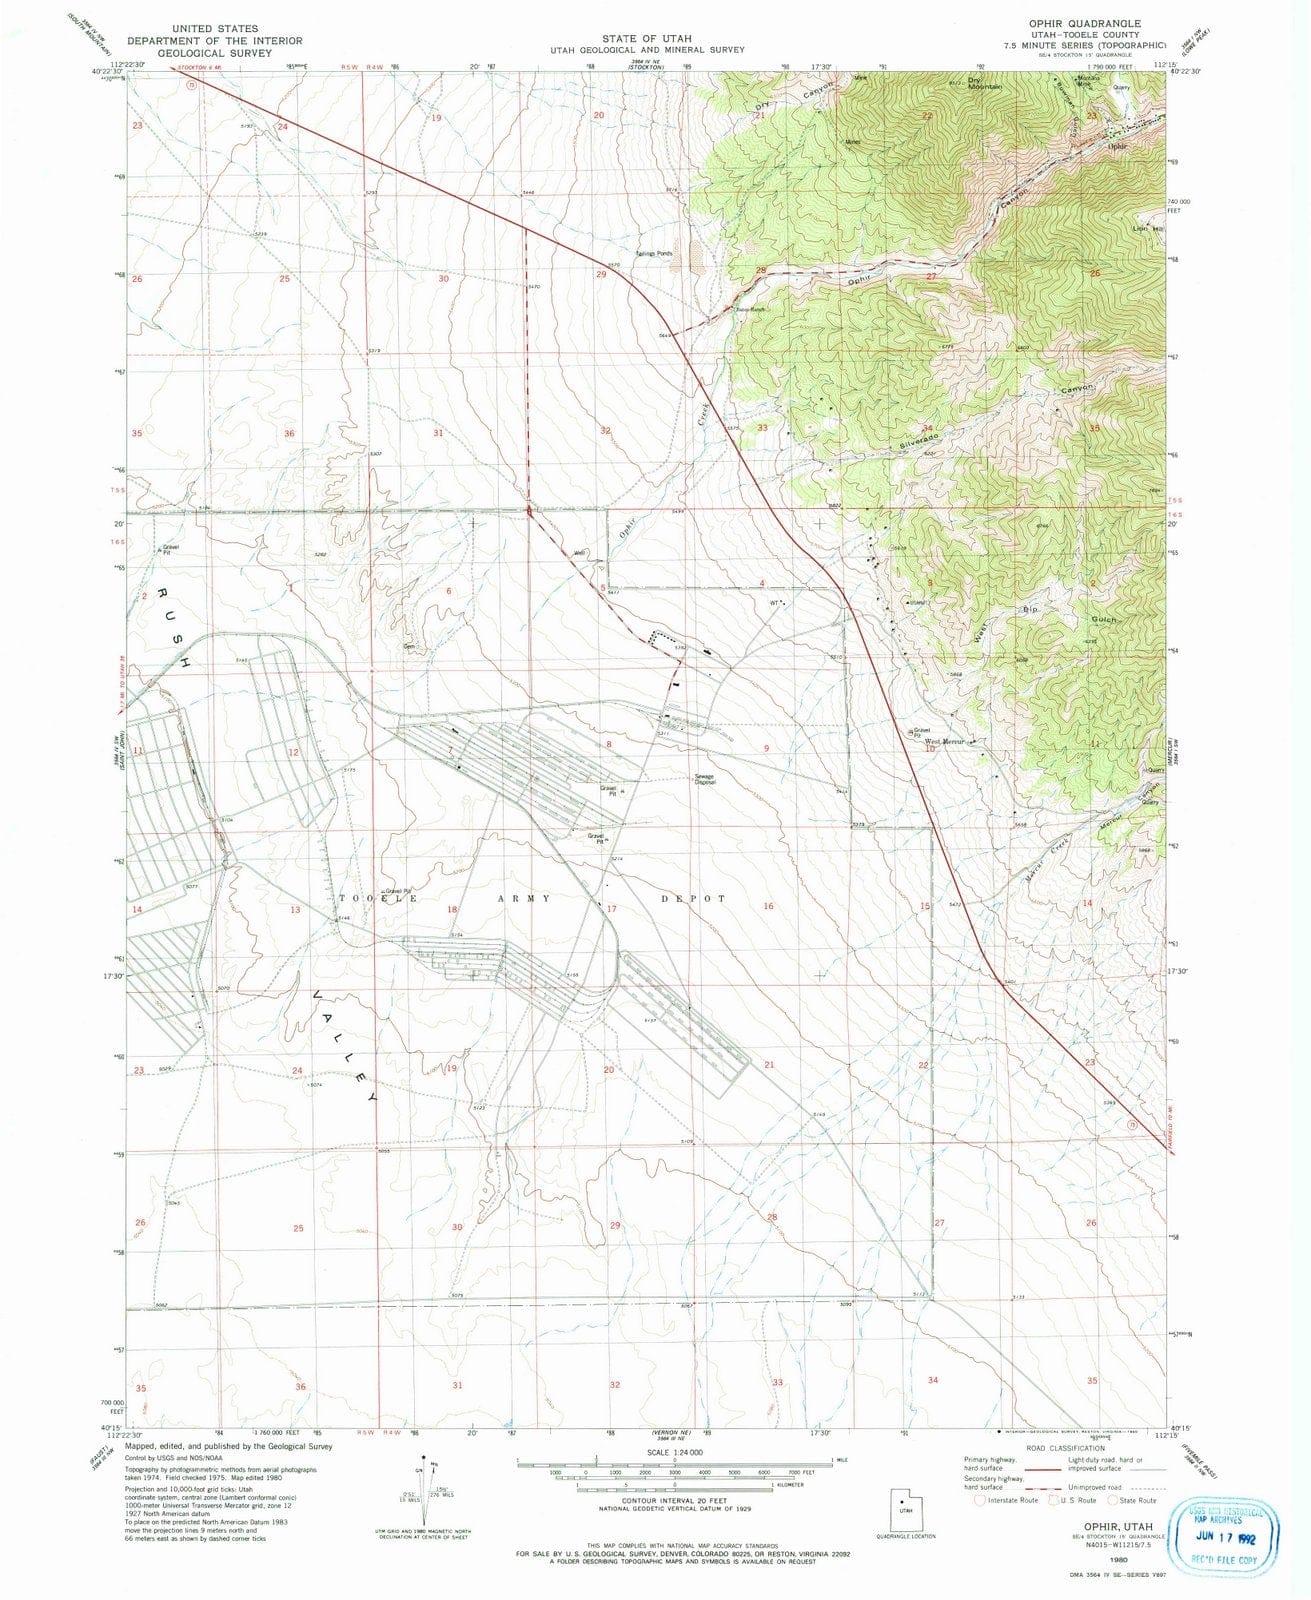 1980 Ophir, UT - Utah - USGS Topographic Map